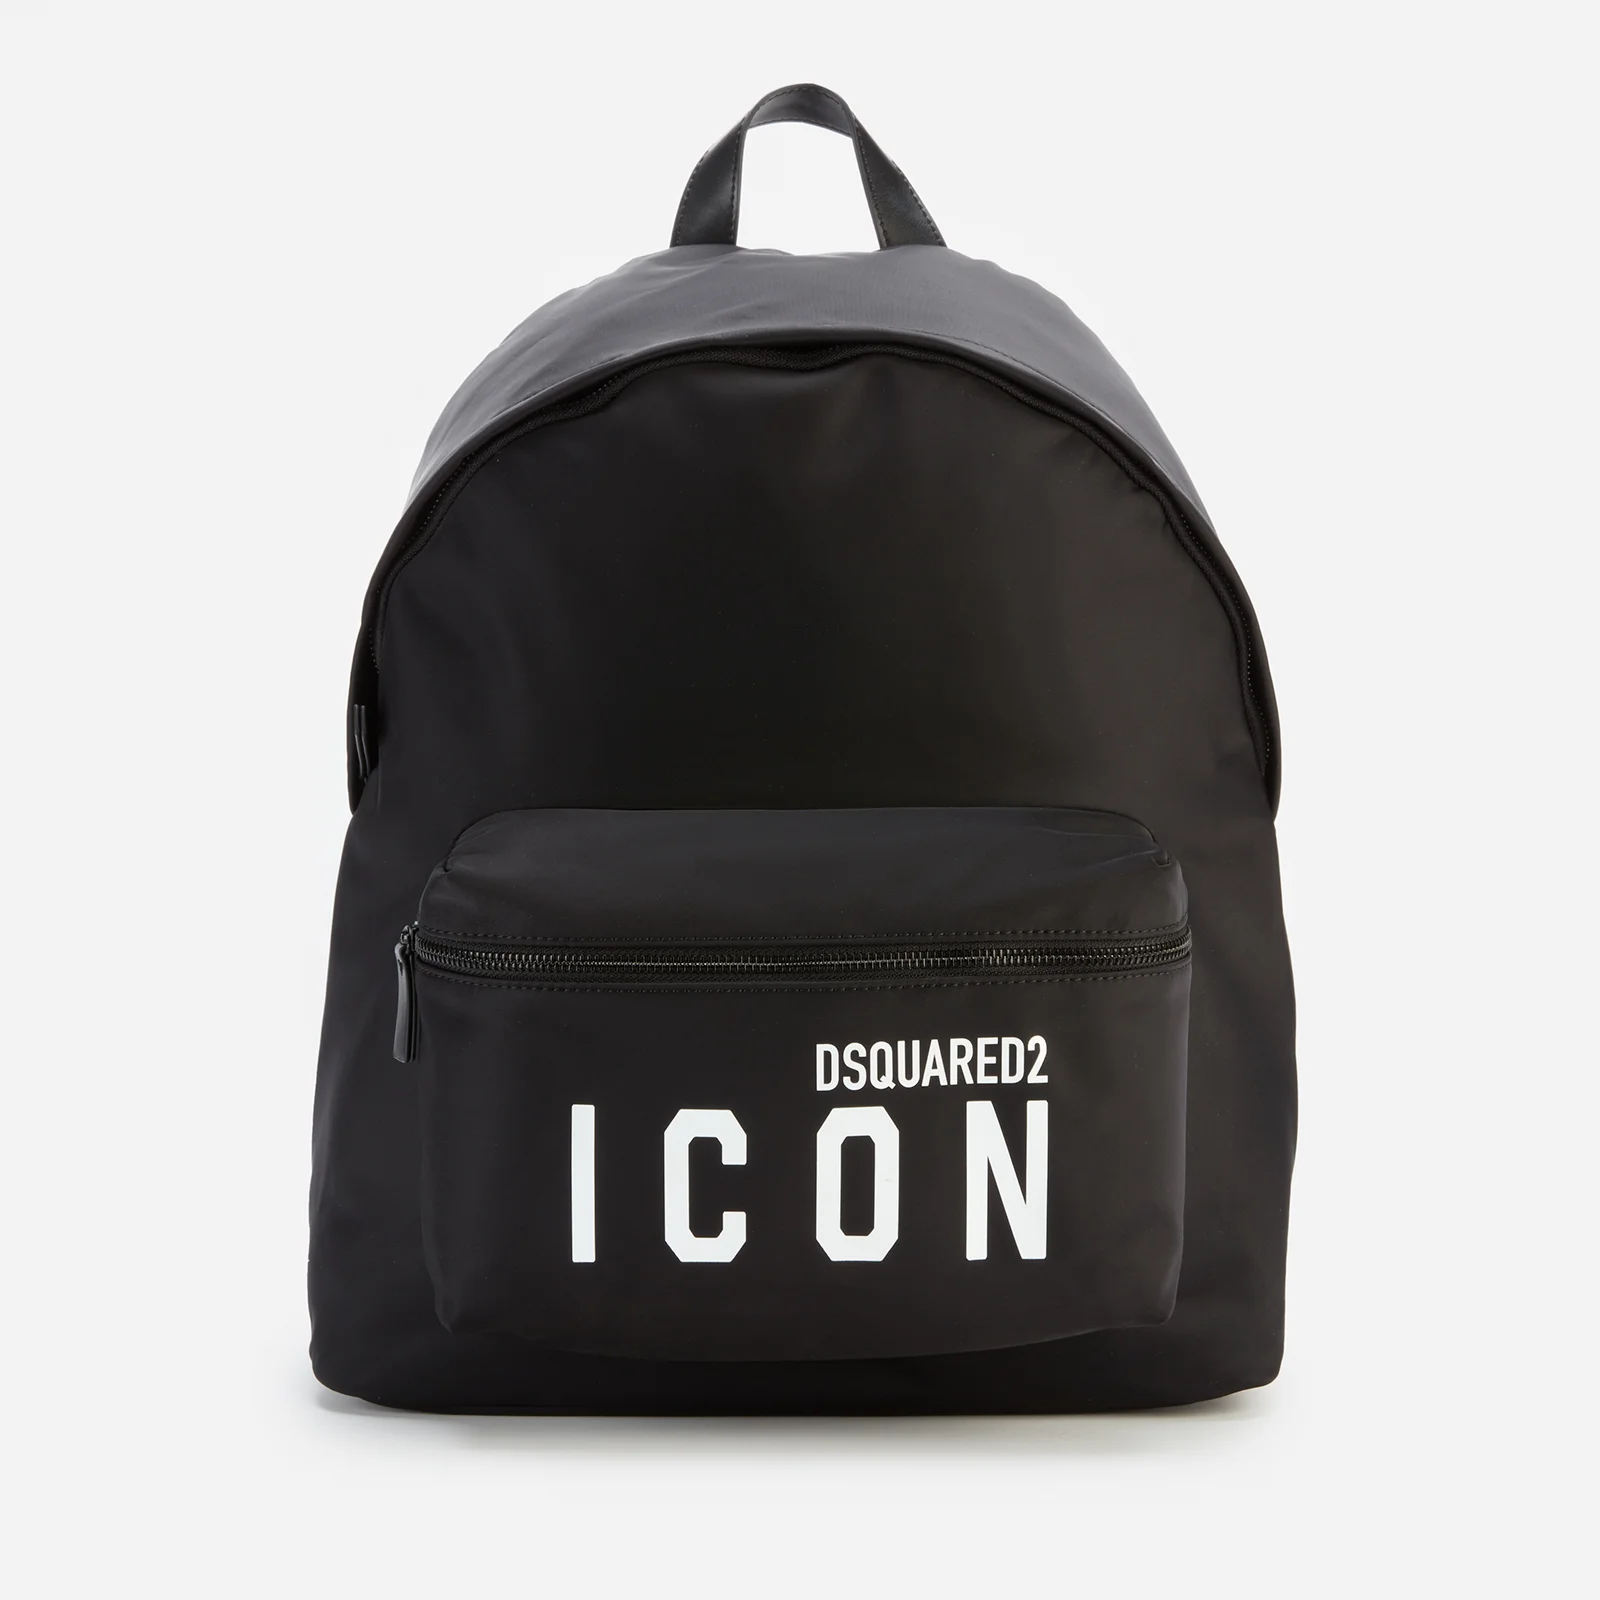 Dsquared2 Men's Icon Backpack - Black Image 1